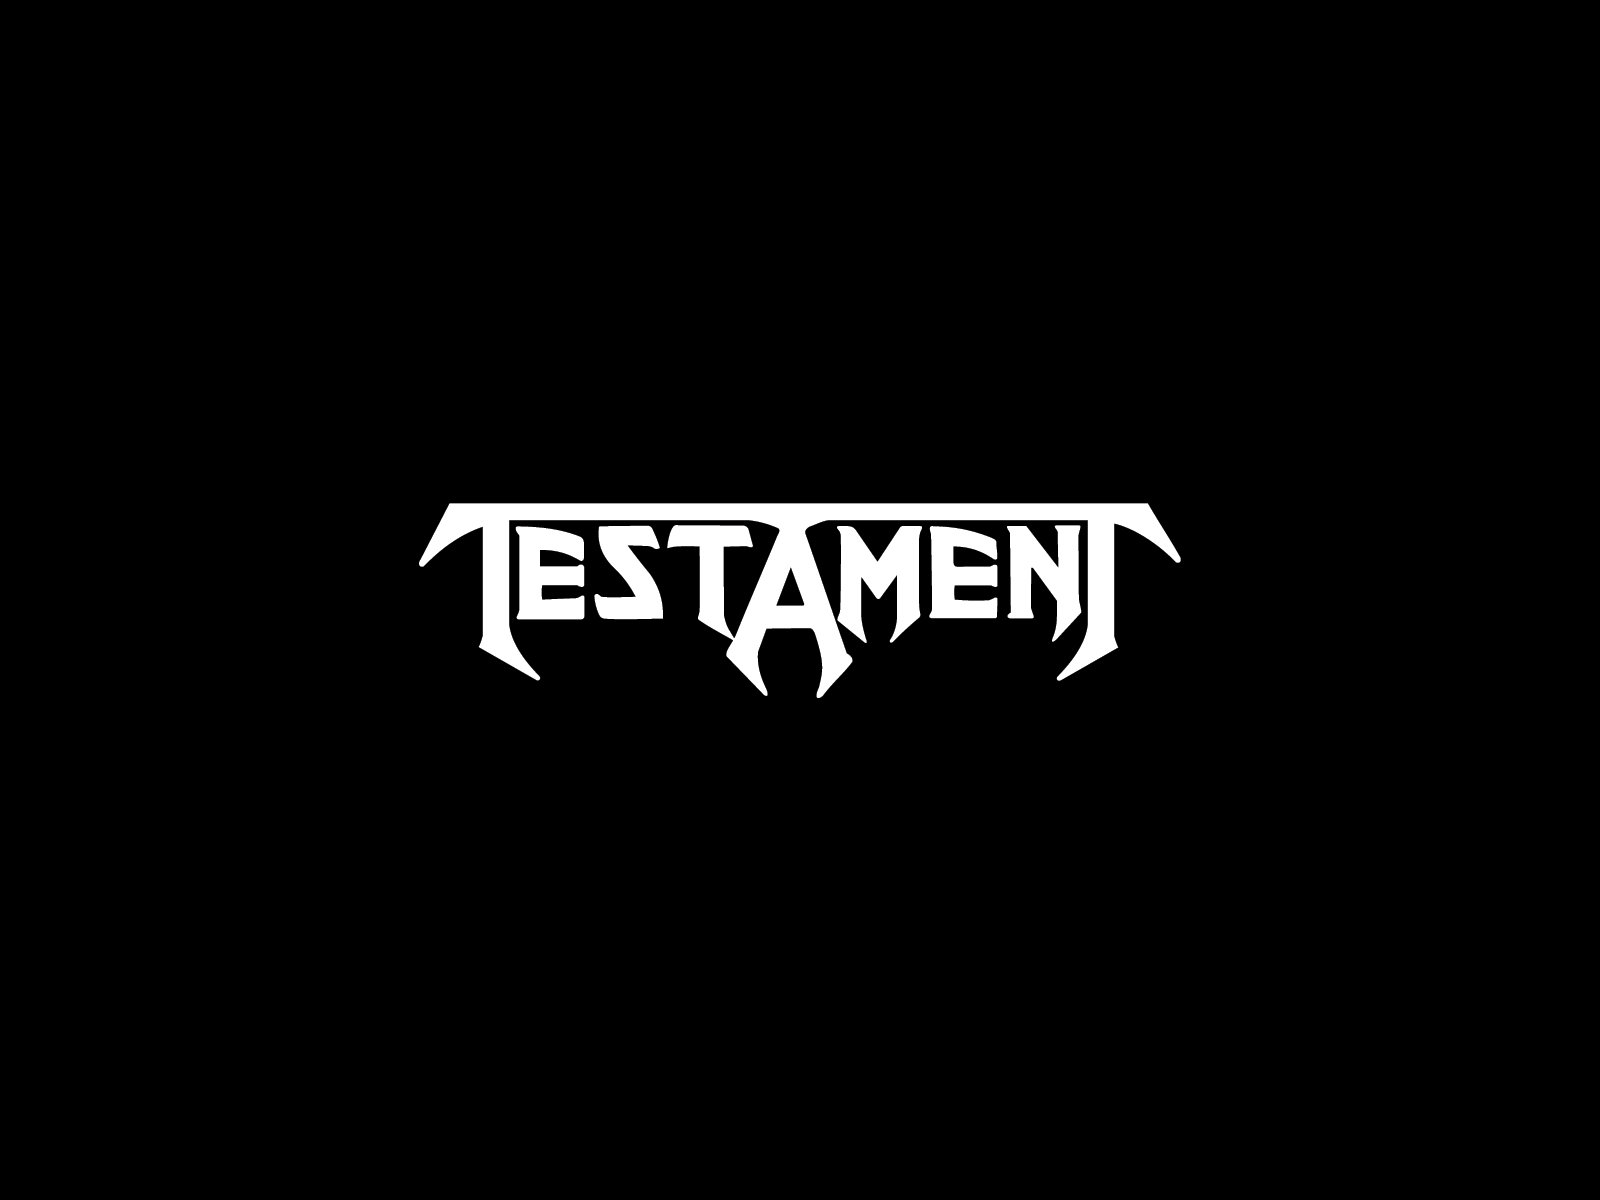 Testament Logo And Wallpaper